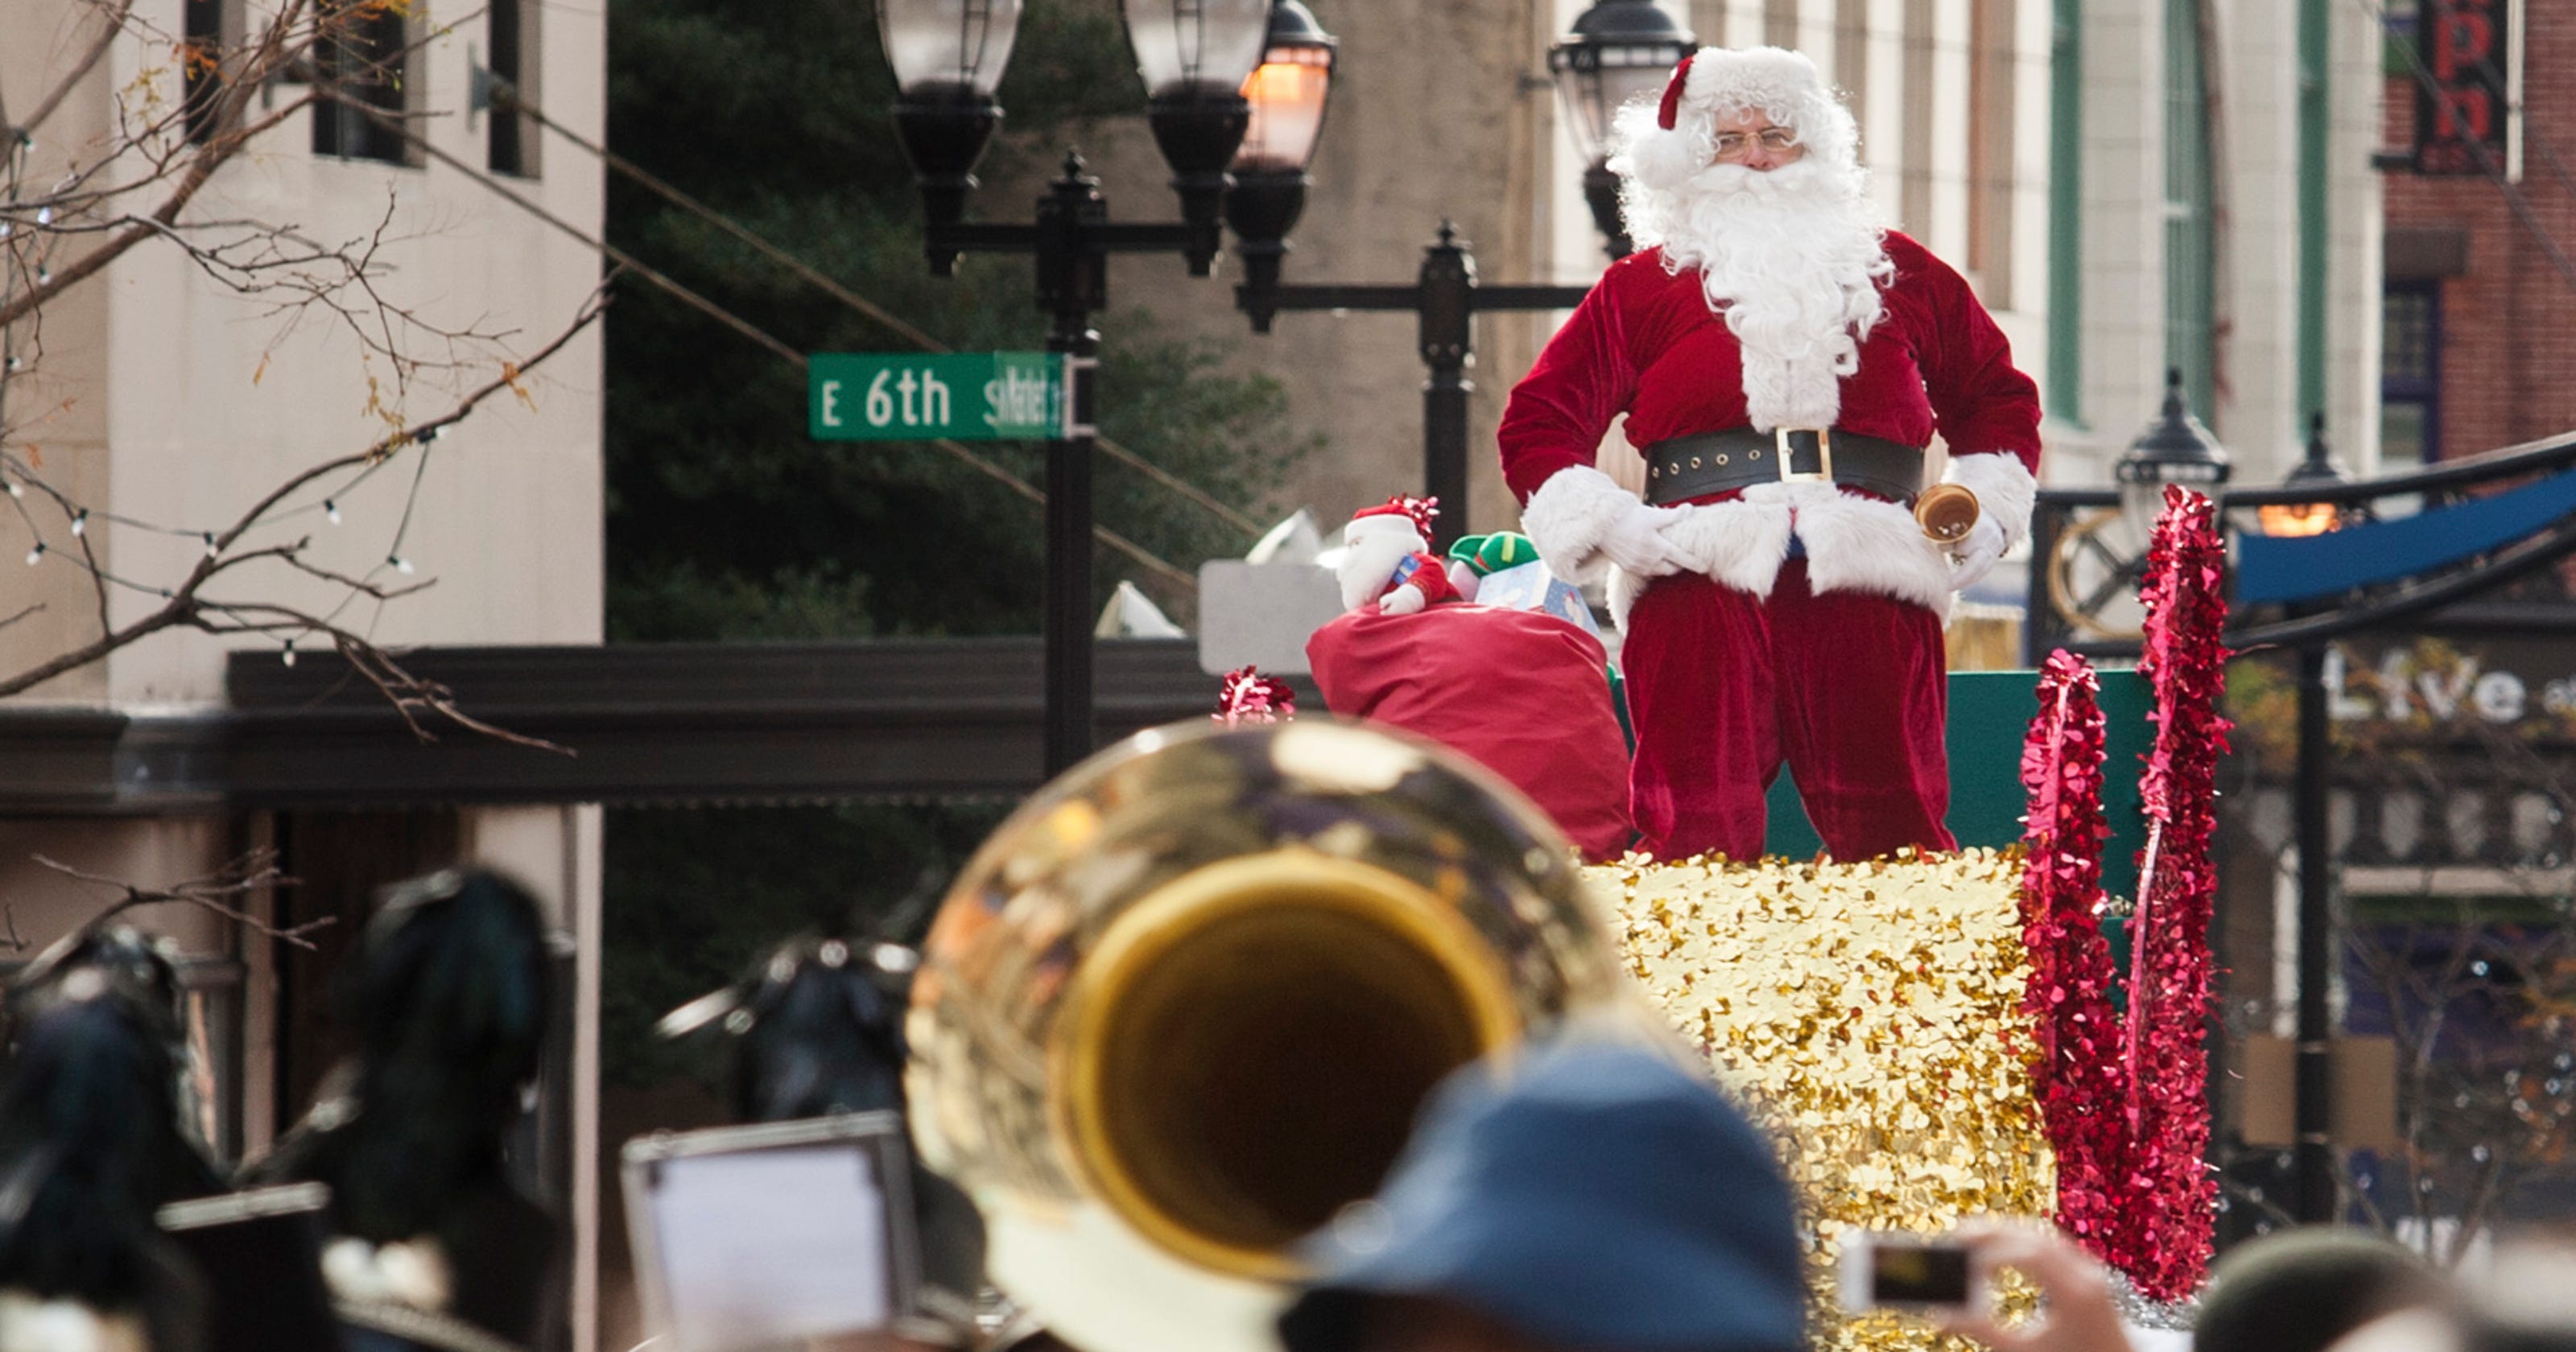 Wilmington Jaycees Christmas Parade rolls in Saturday